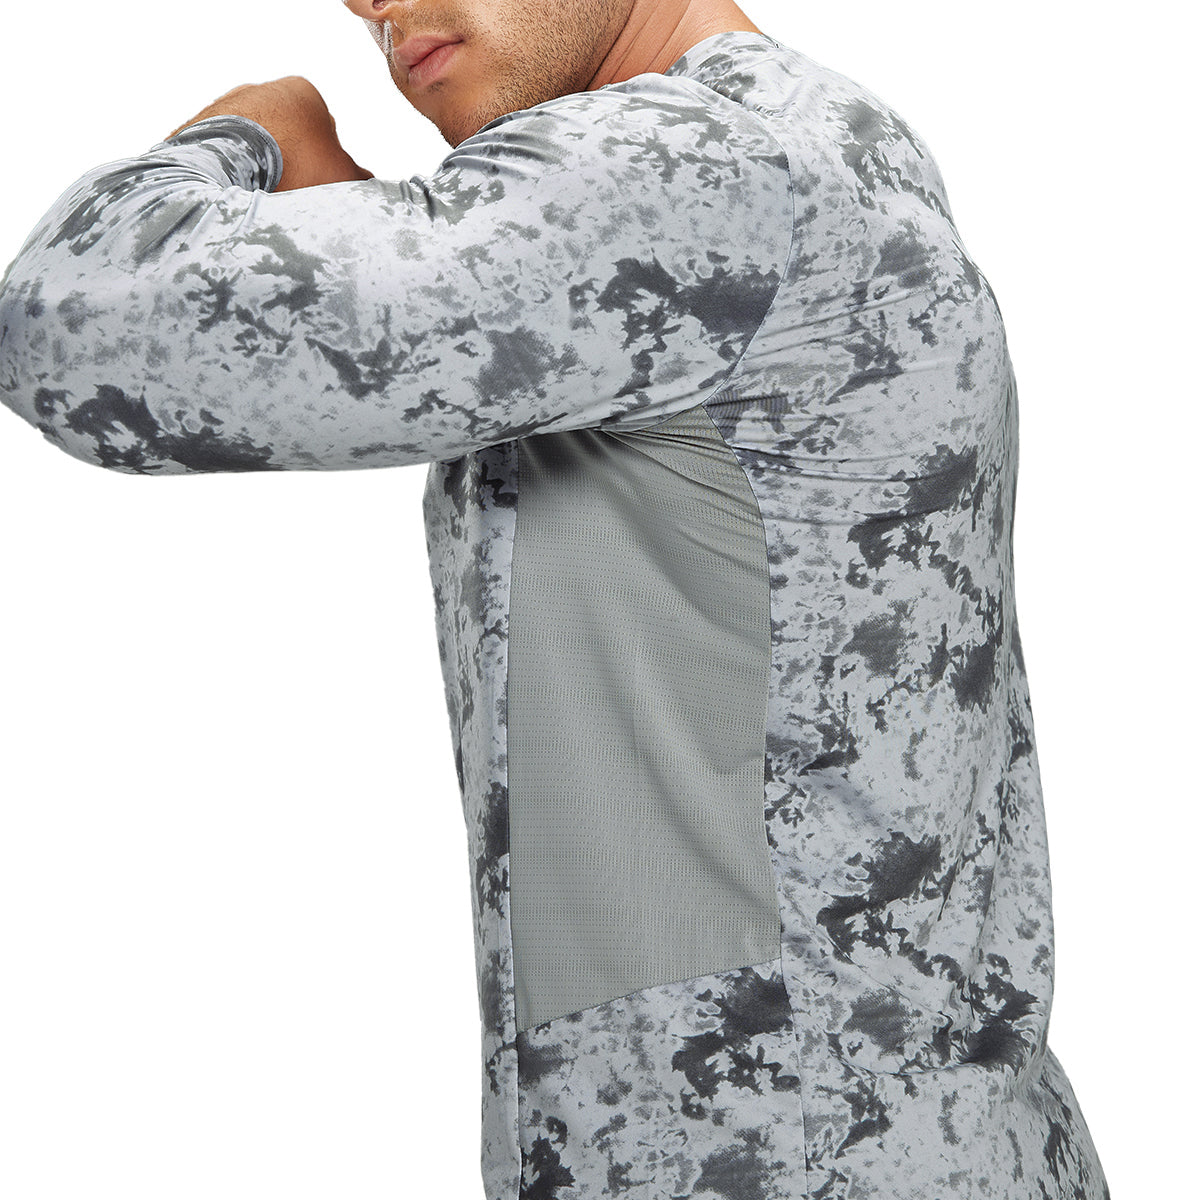 Super Stretchy Long-Sleeves Rash Guard - Grey Tie Dye AOP